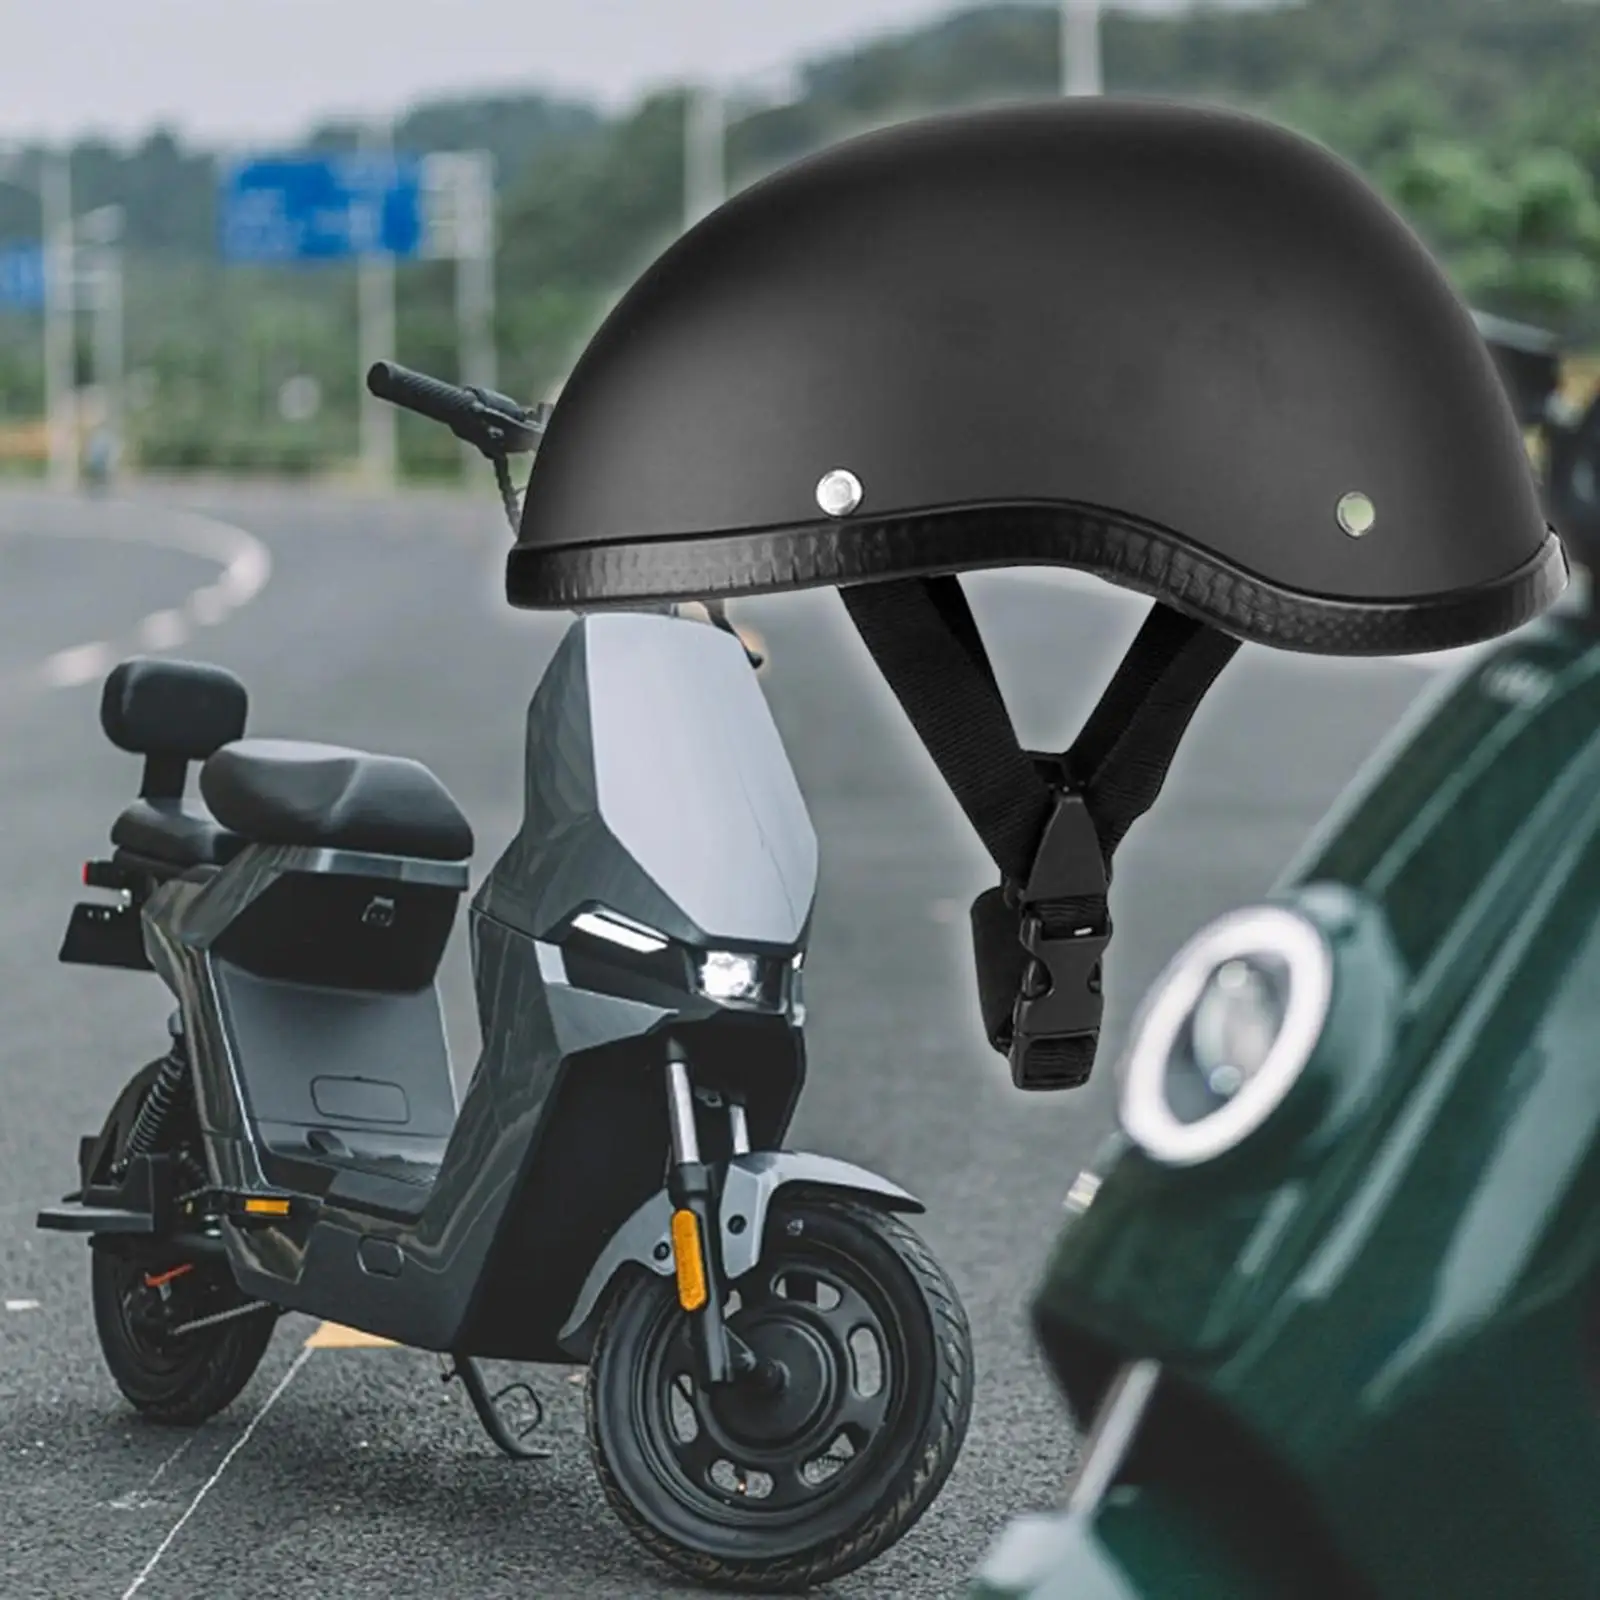 Motorcycle Helmet Multi Layer Protection Lightweight for Men Women Comfortable Riding Helmet Bicycle Helmet Adult Cycling Helmet